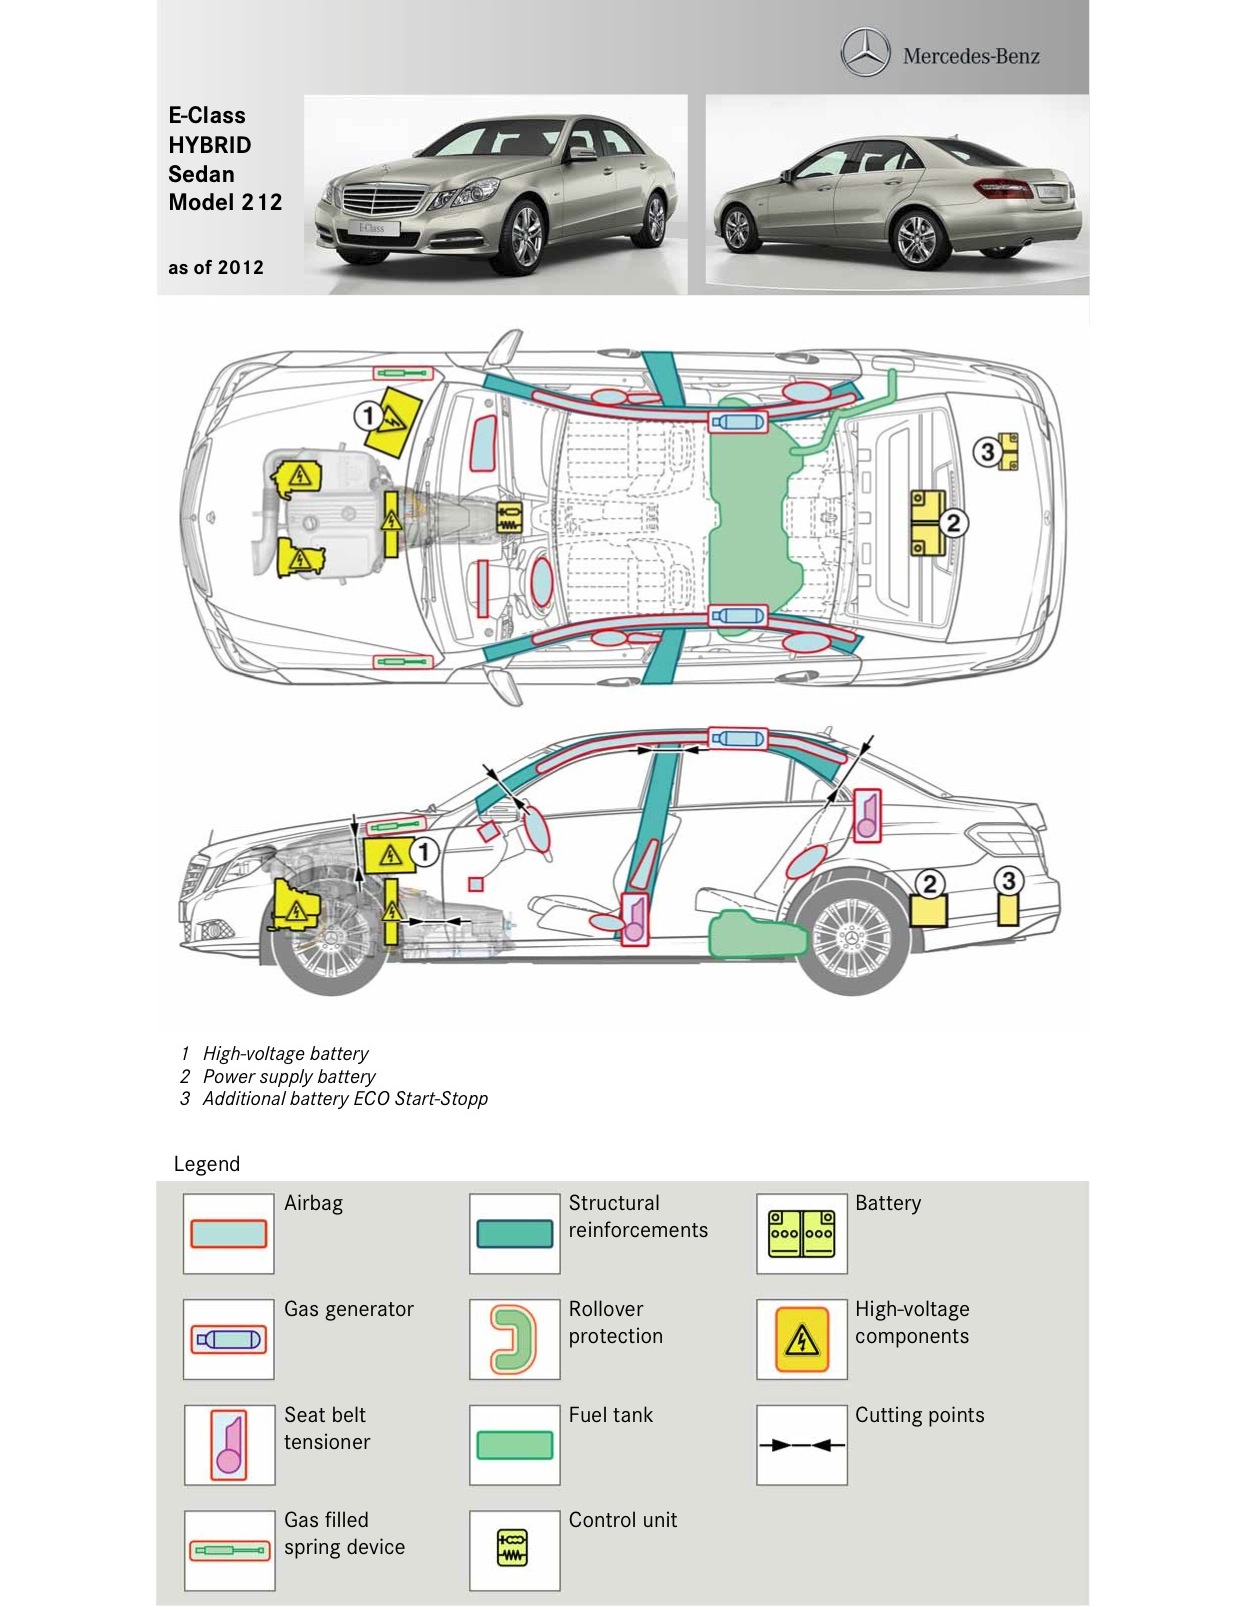 Extrication-Mercedes-Benz-E-Class-Hybrid-Rescue-Card